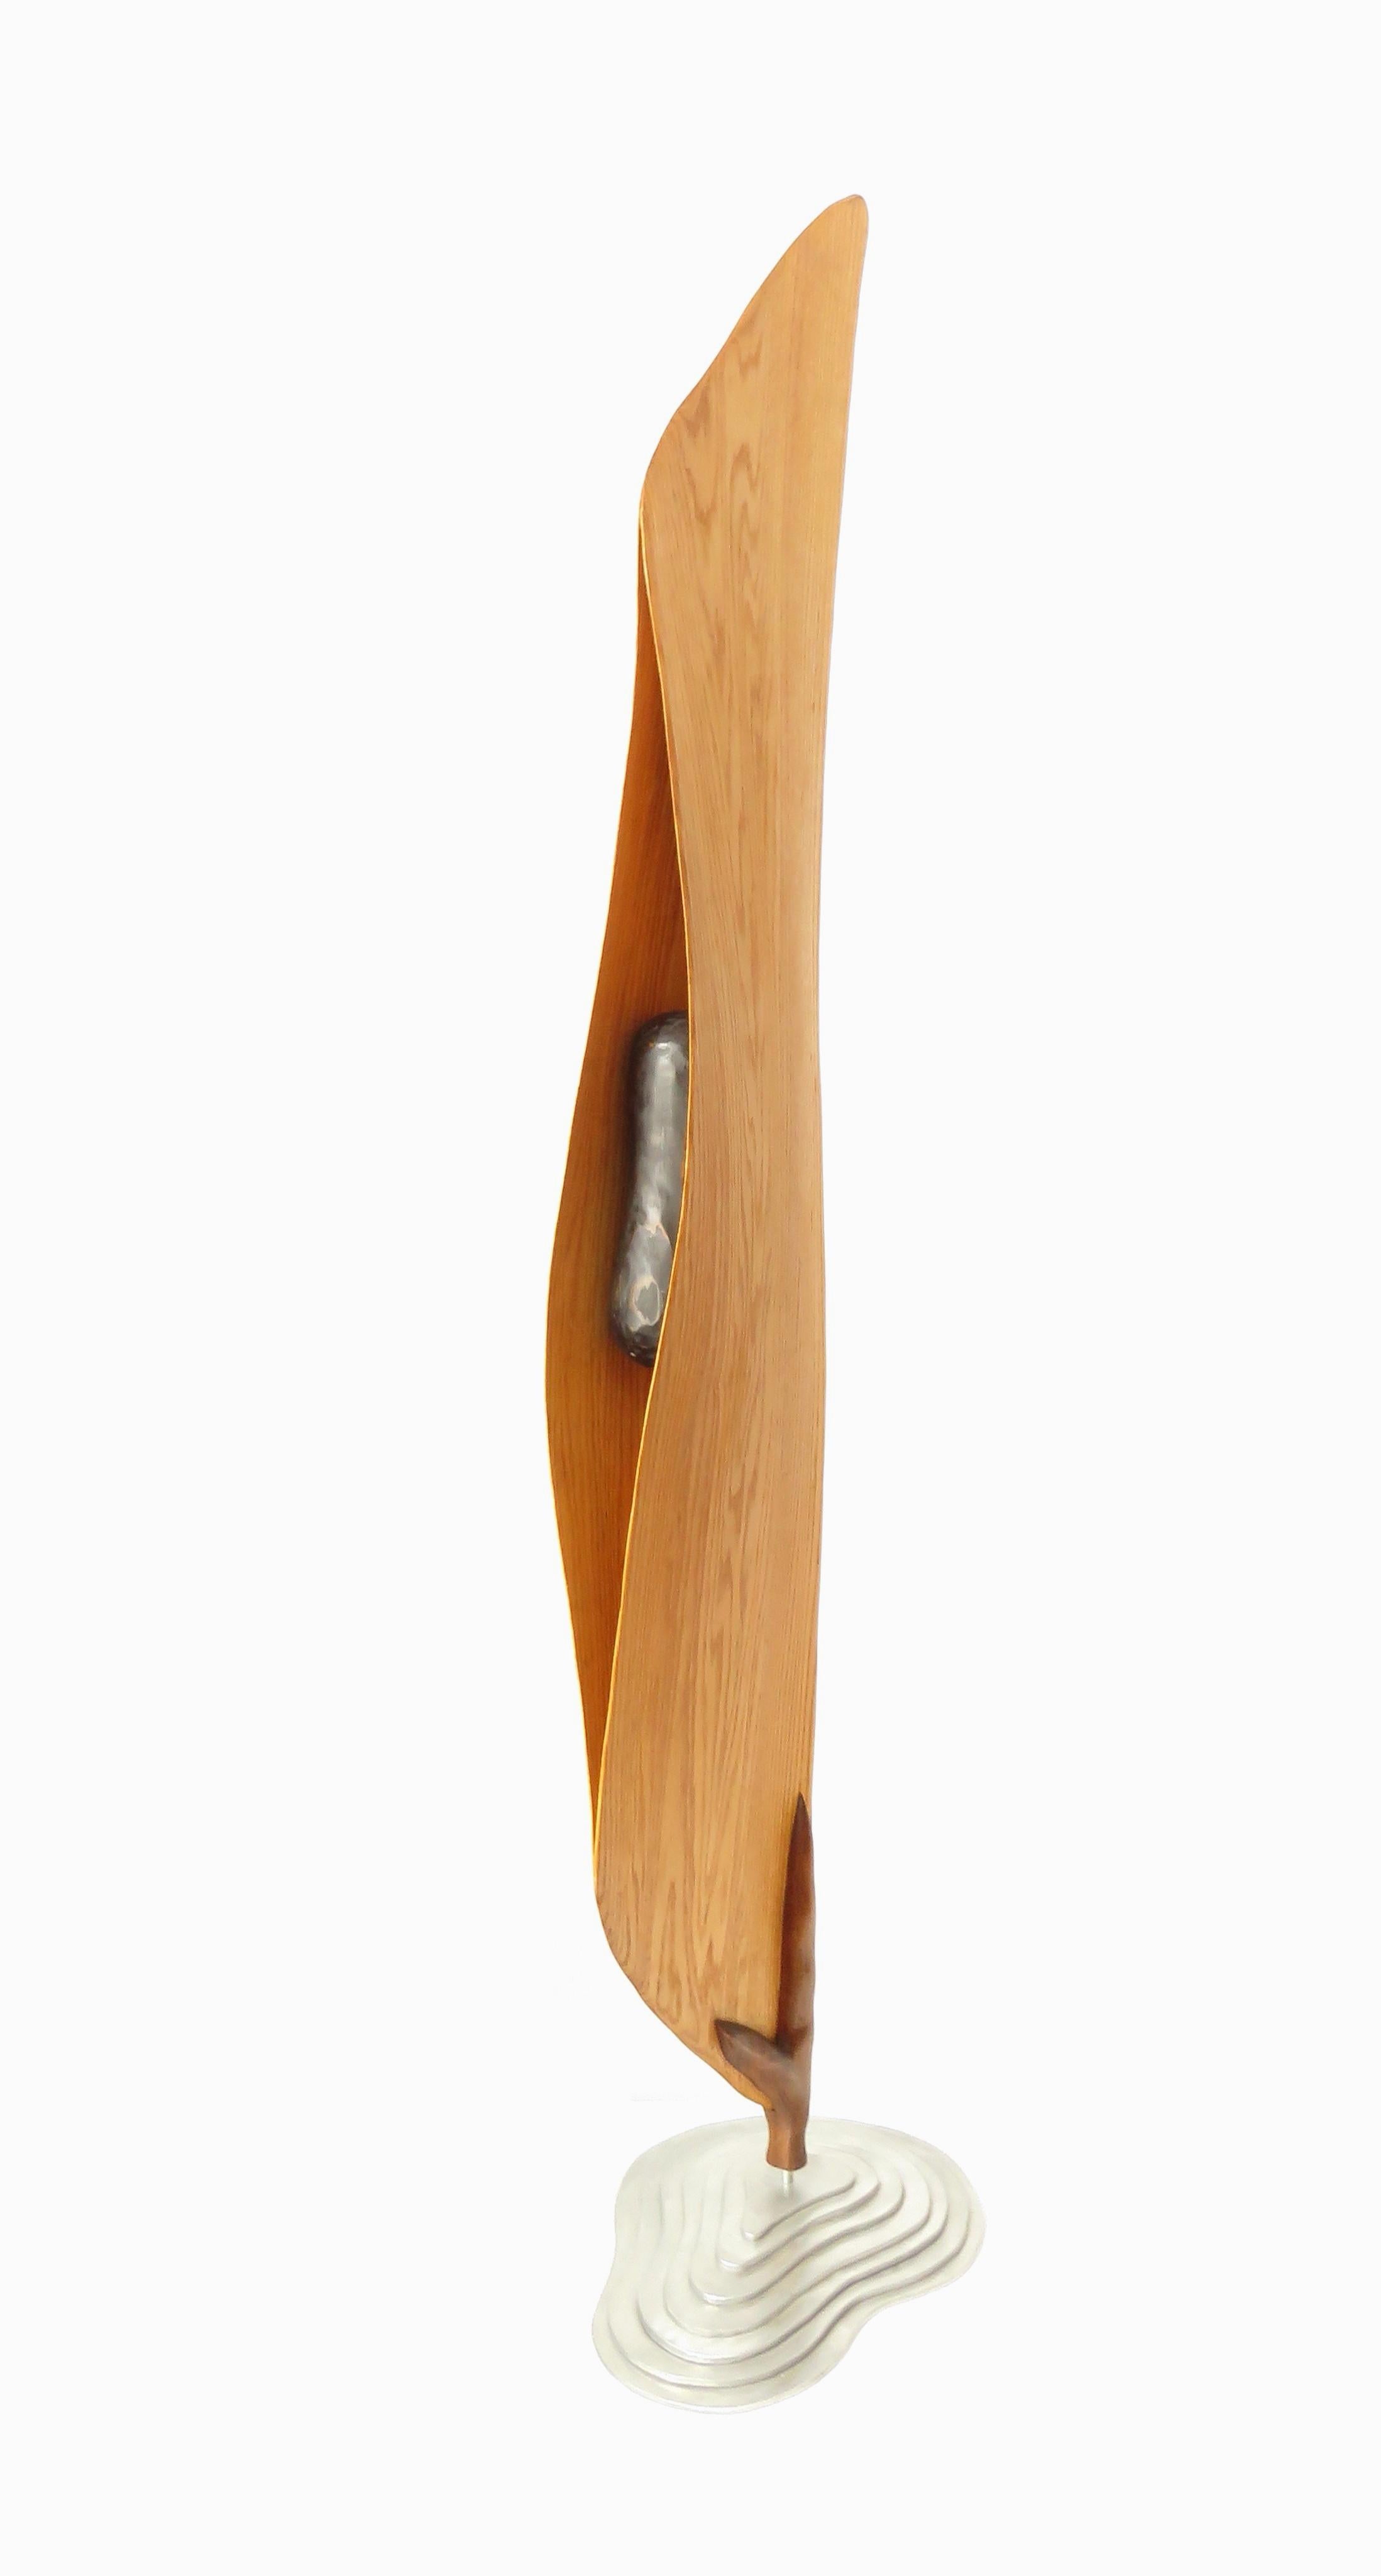 Eric Tardif Abstract Sculpture – Cocoon (Holz rote Eiche Vogel abstrakte Kunst zen Skulptur Sockel minimal Erbse Schote)